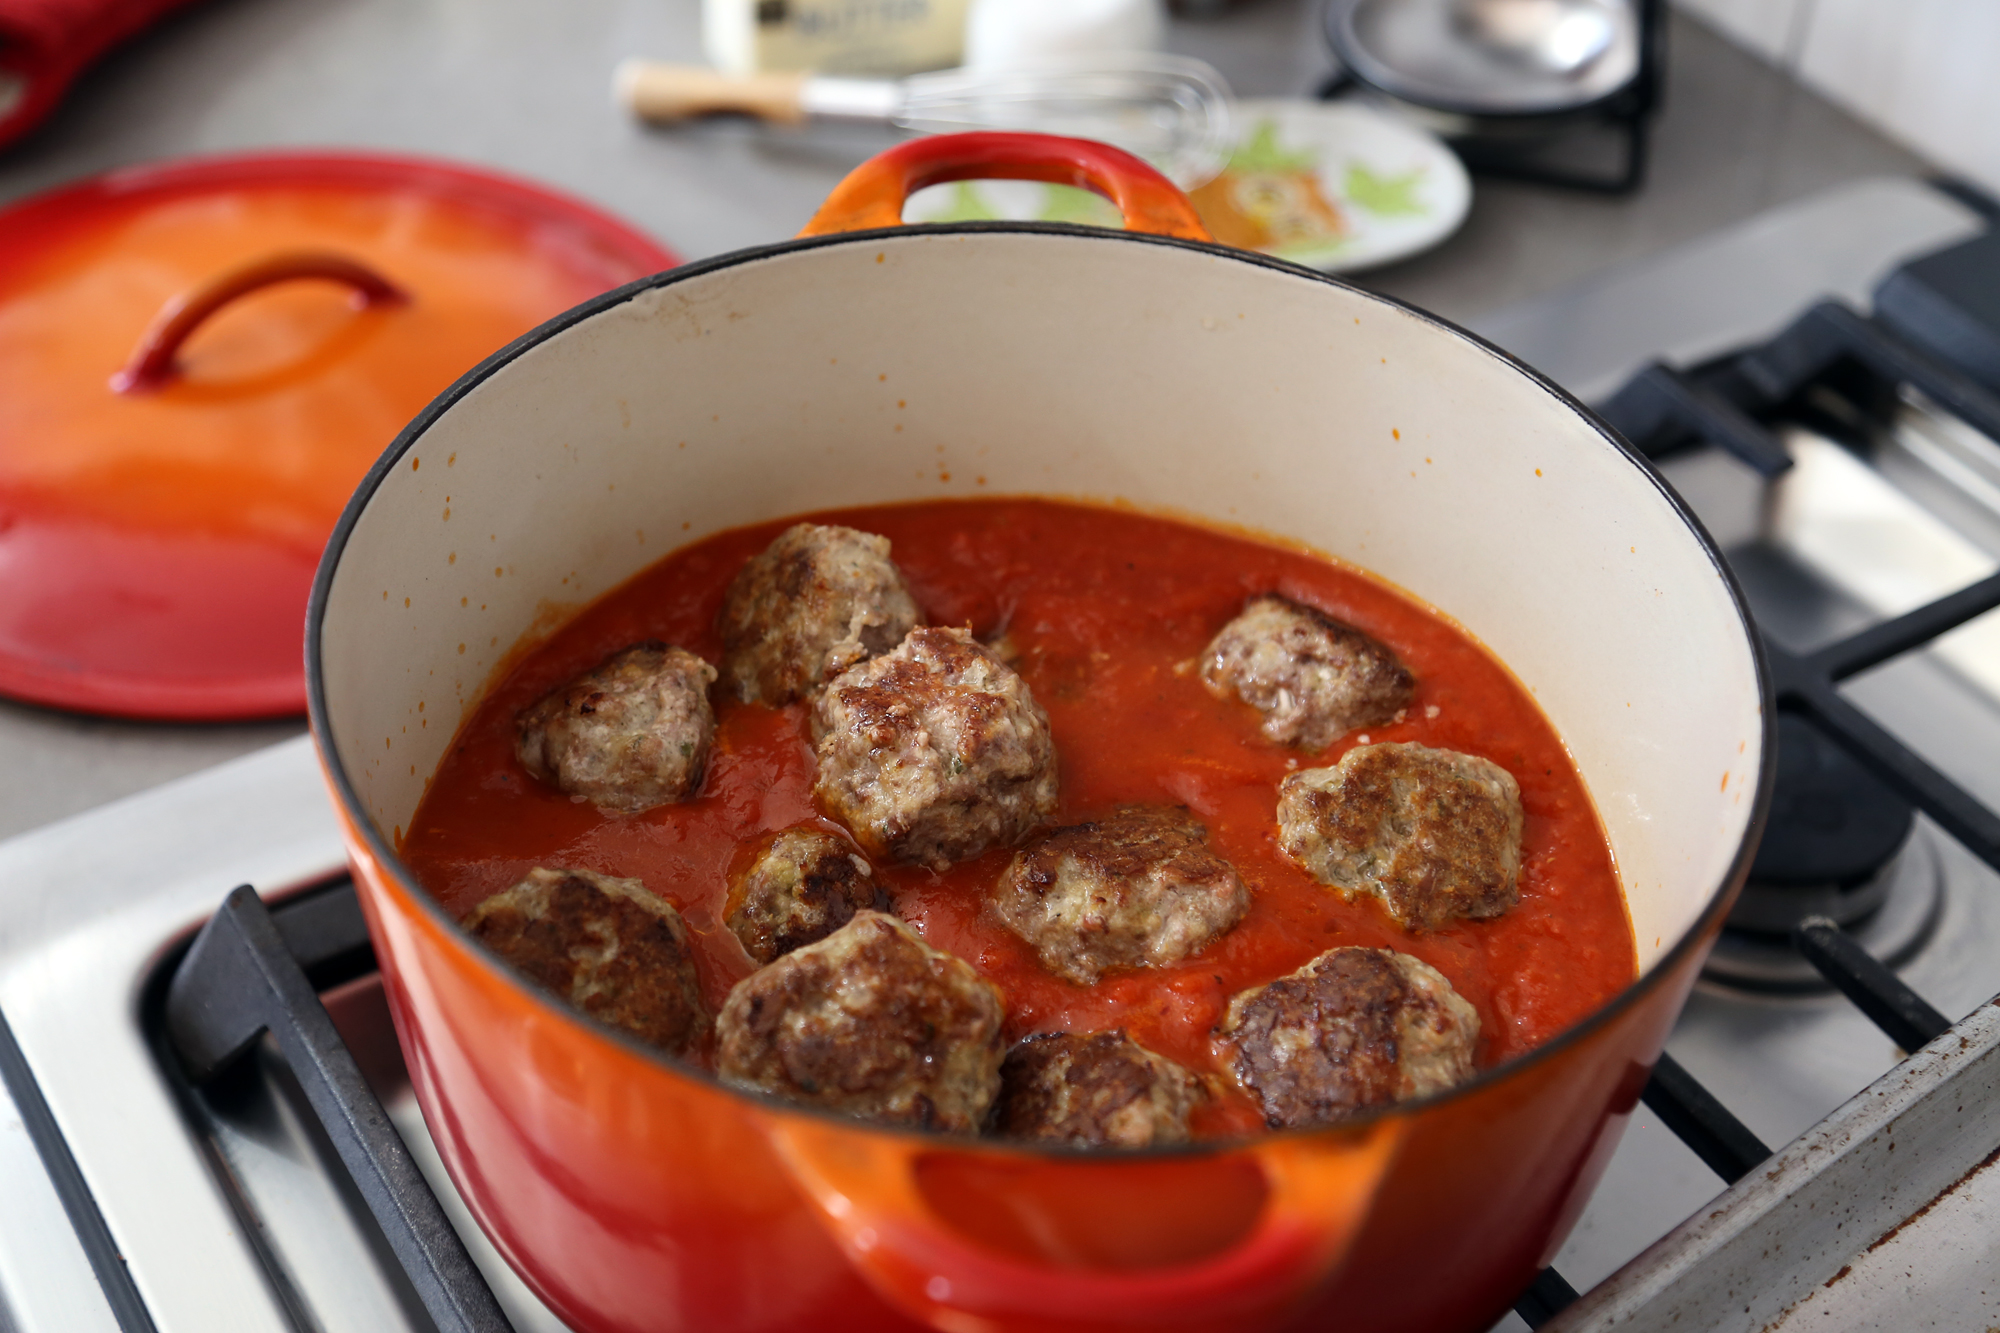 Meatballs simmering in tomato sauce.